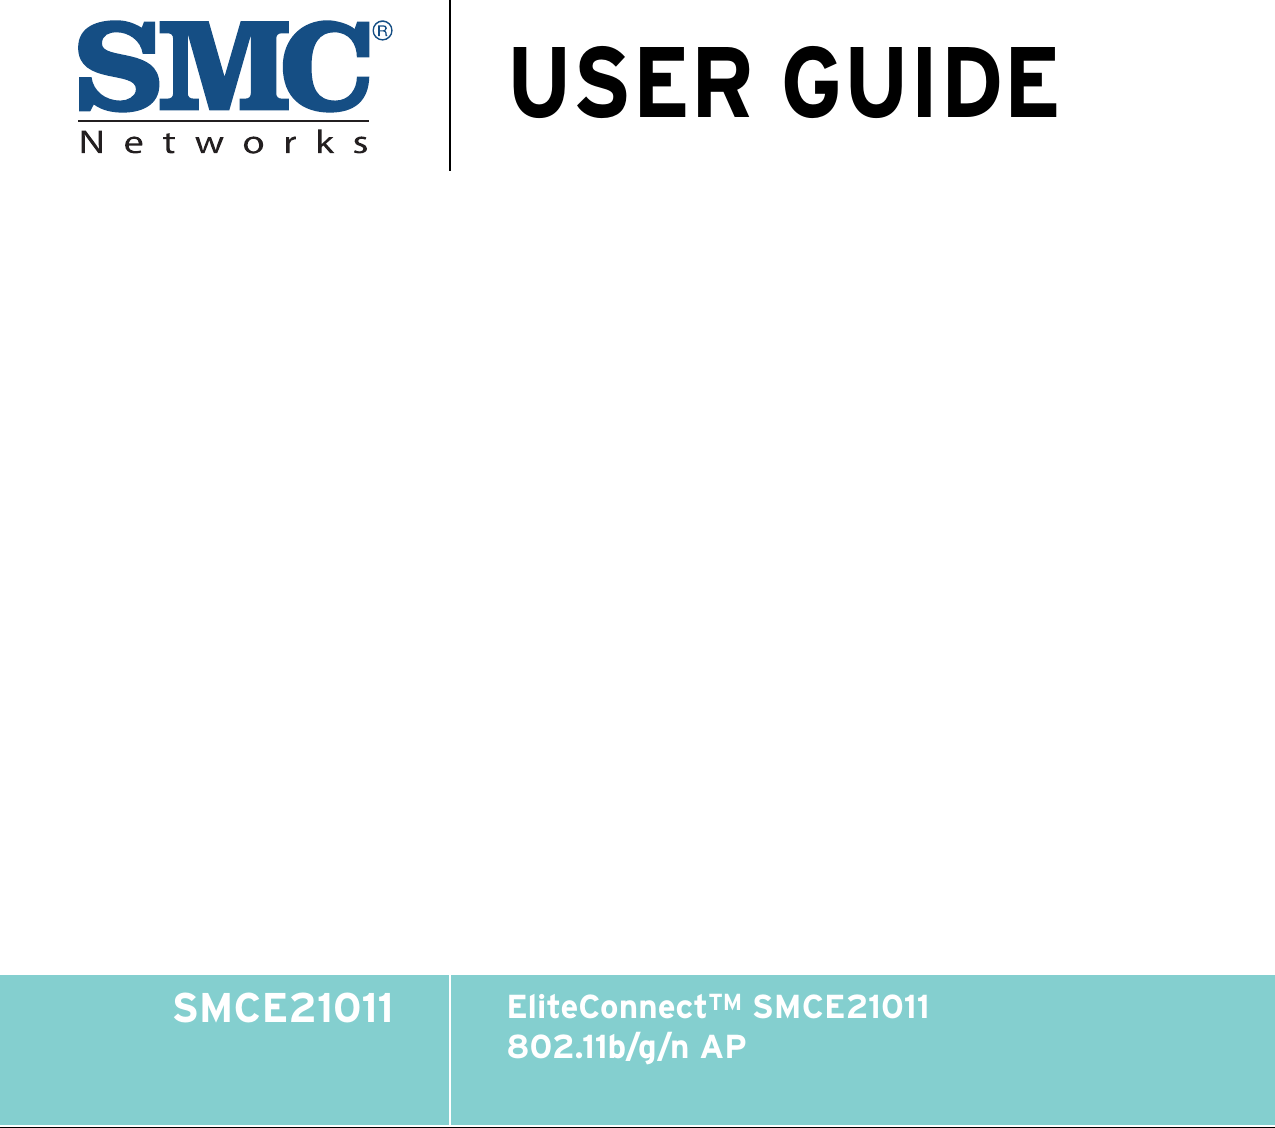 USER GUIDEEliteConnectTM SMCE21011802.11b/g/n APSMCE21011